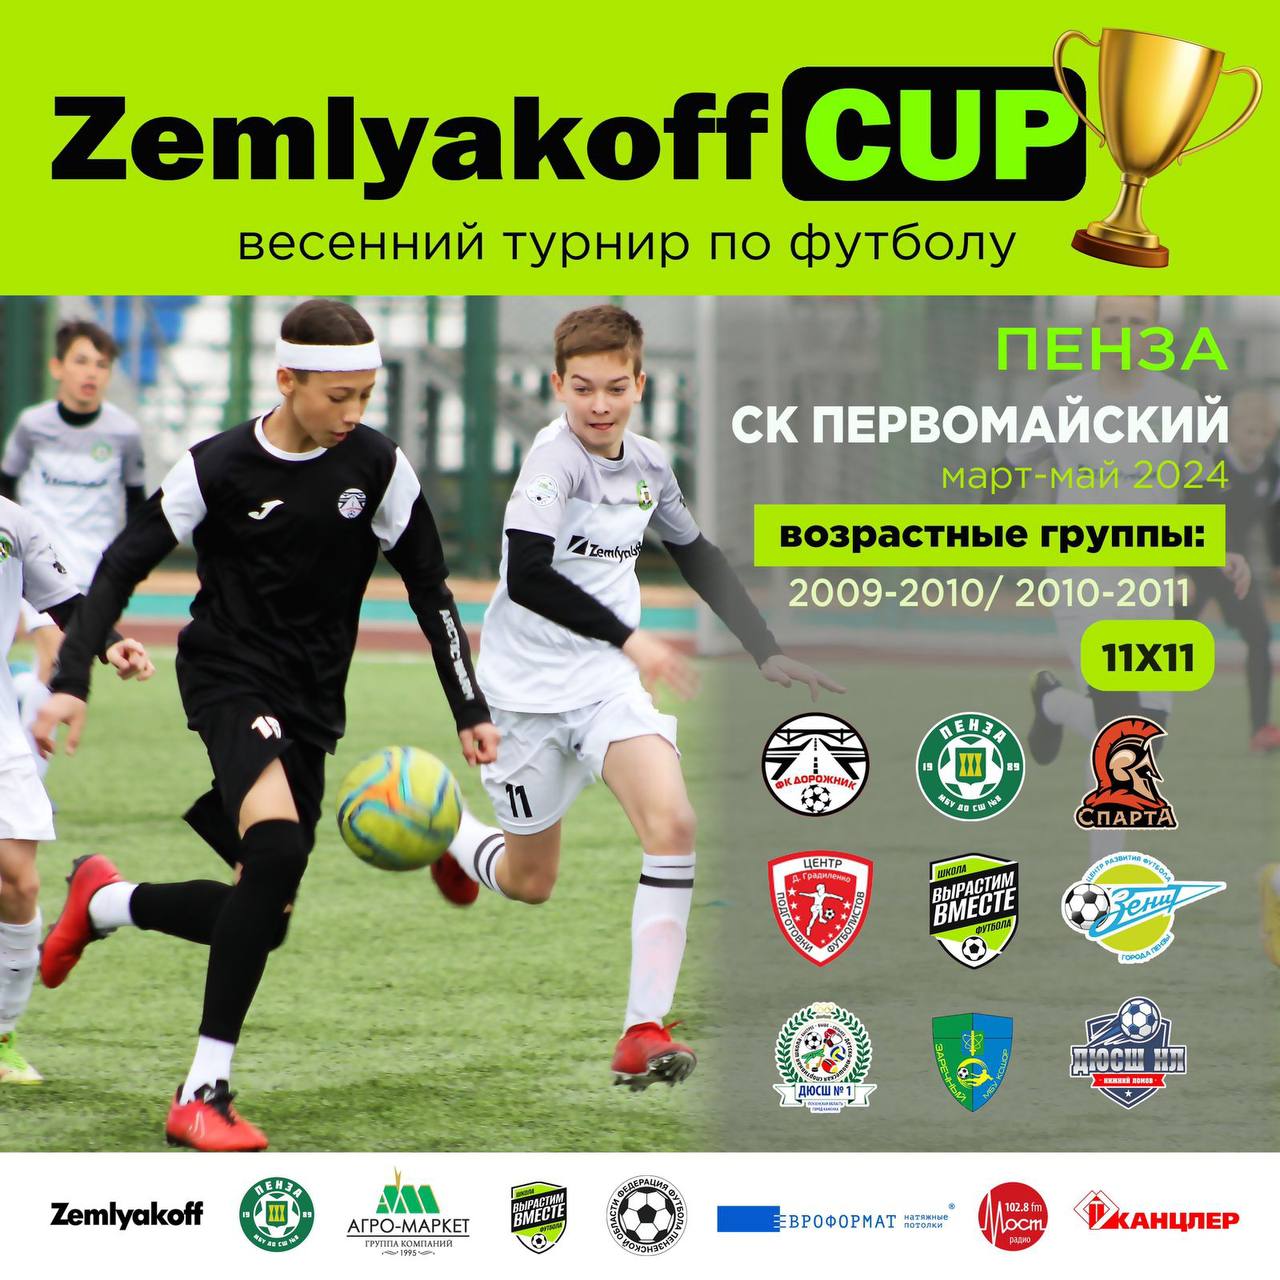 Весенний турнир «ZEMLYAKOFF CUP» для футболистов 2009, 2010, 2011 г.р.